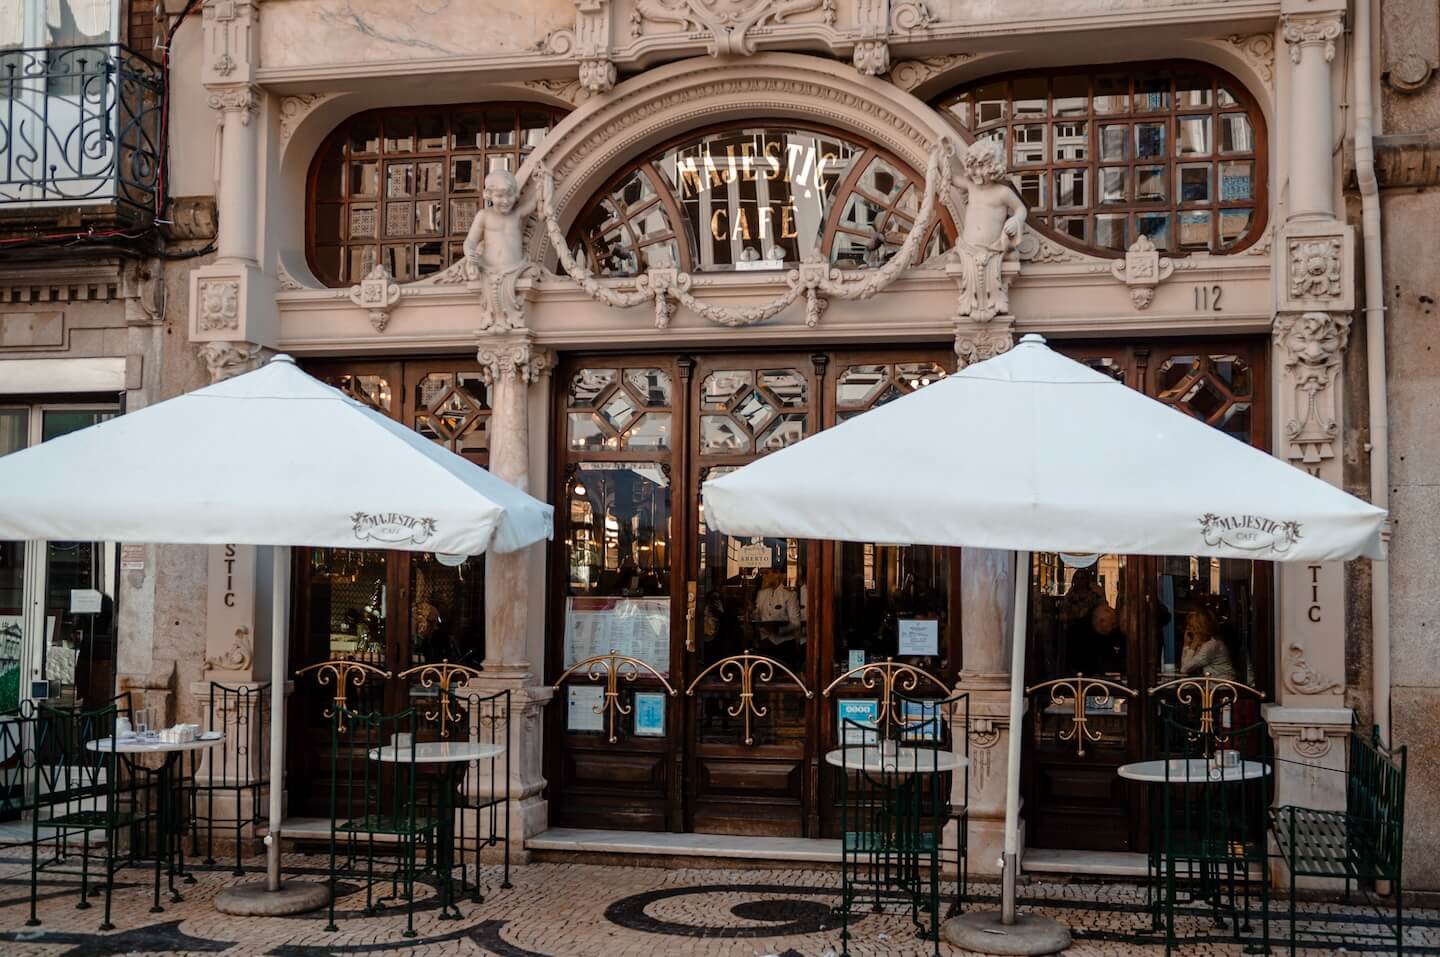 Entrance to Cafe Majestic in Porto